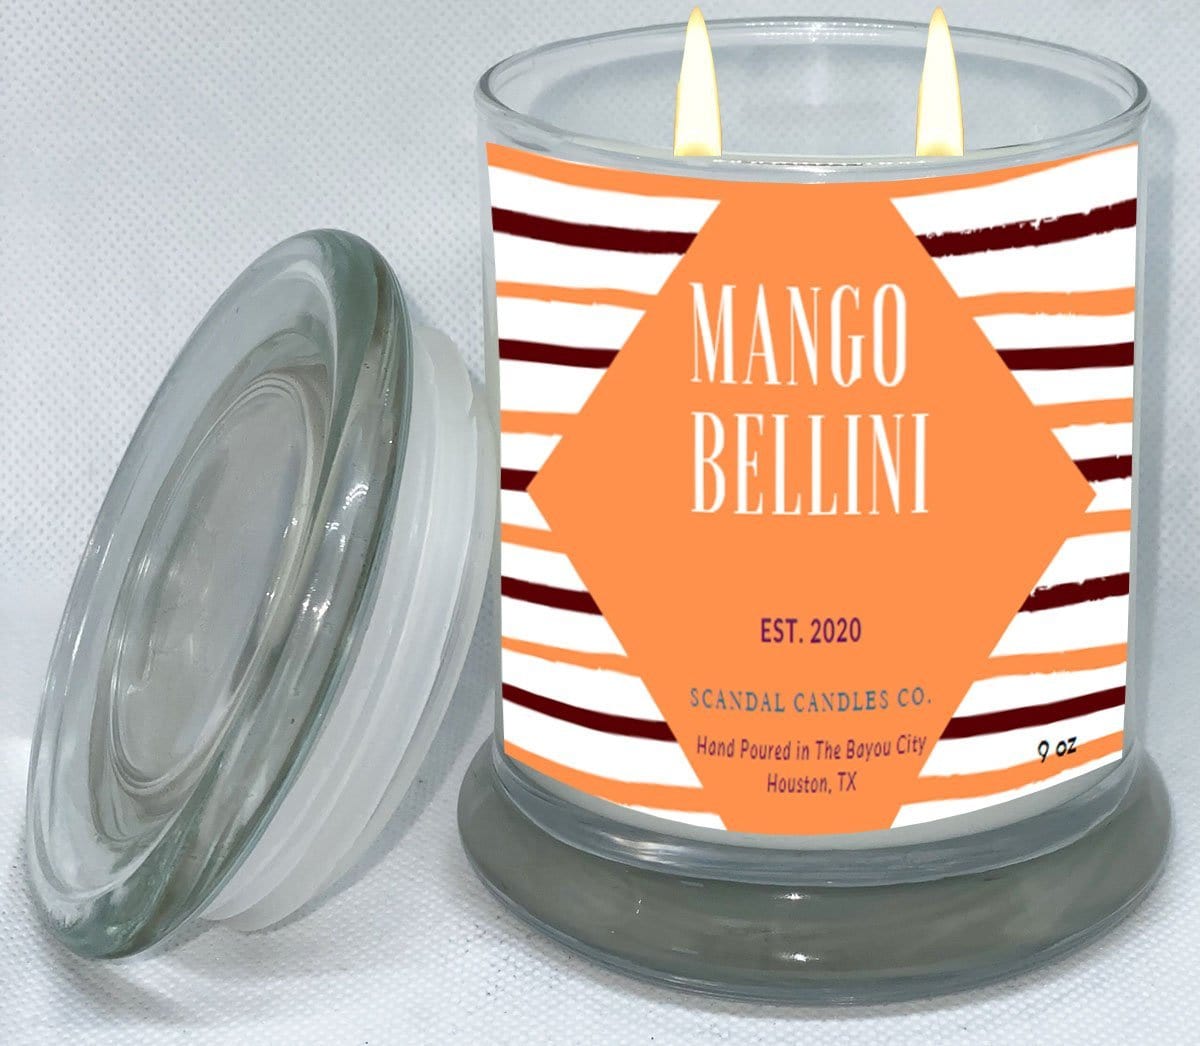 Mango Bellini - Scandal Candles Co.